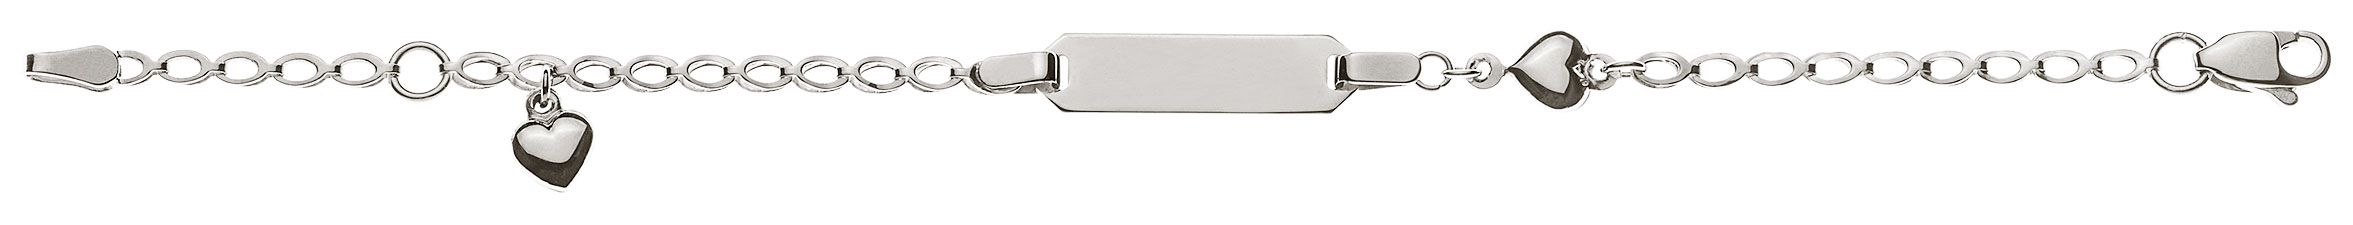 AURONOS Prestige ID-Bracelet en or blanc 18k Chaîne fantaisie 14cm